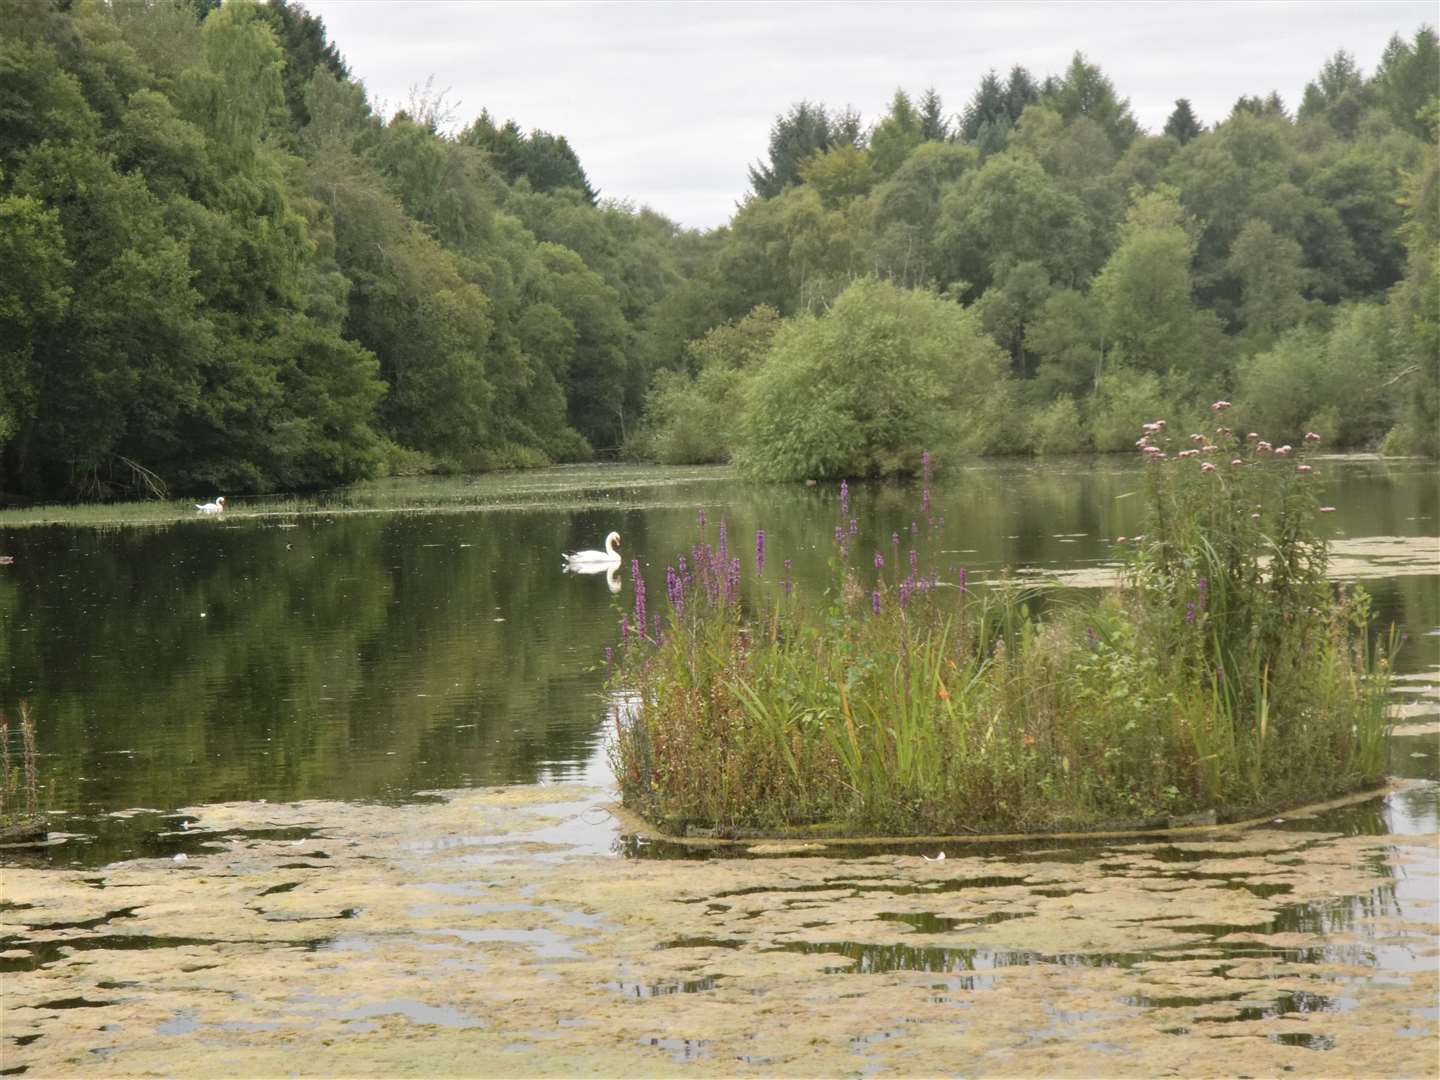 Swans on Brodie Castle pond.